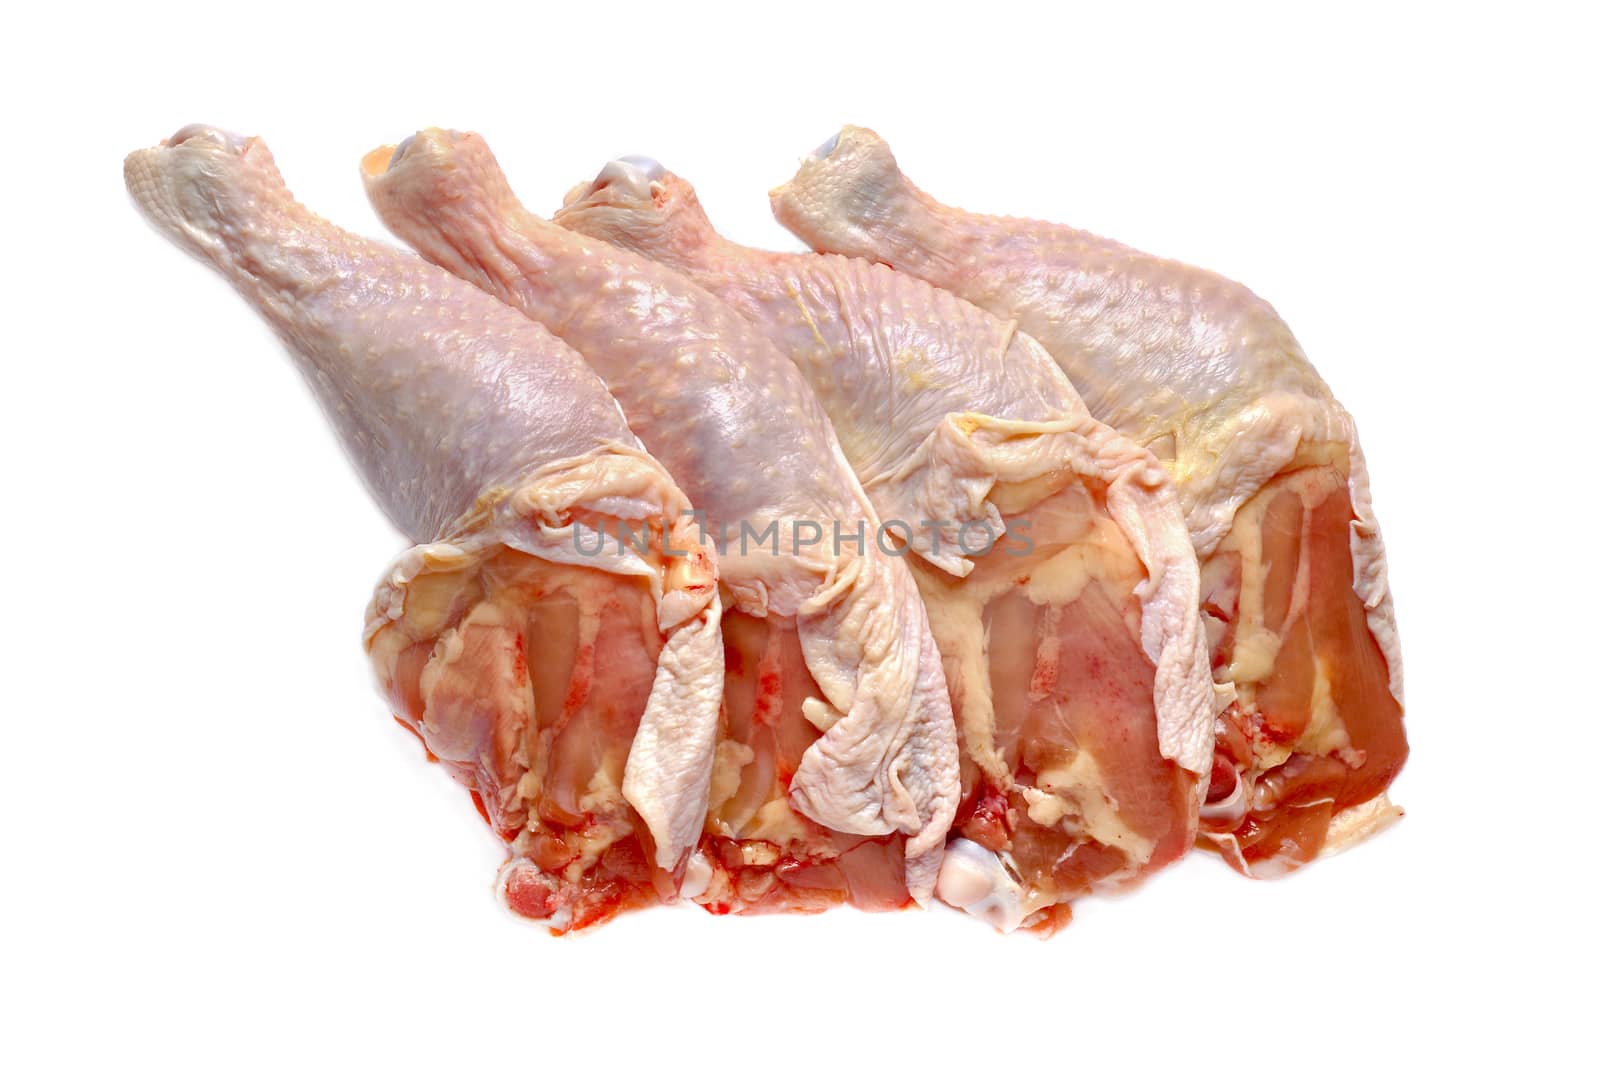 Raw chicken's legs by Jova